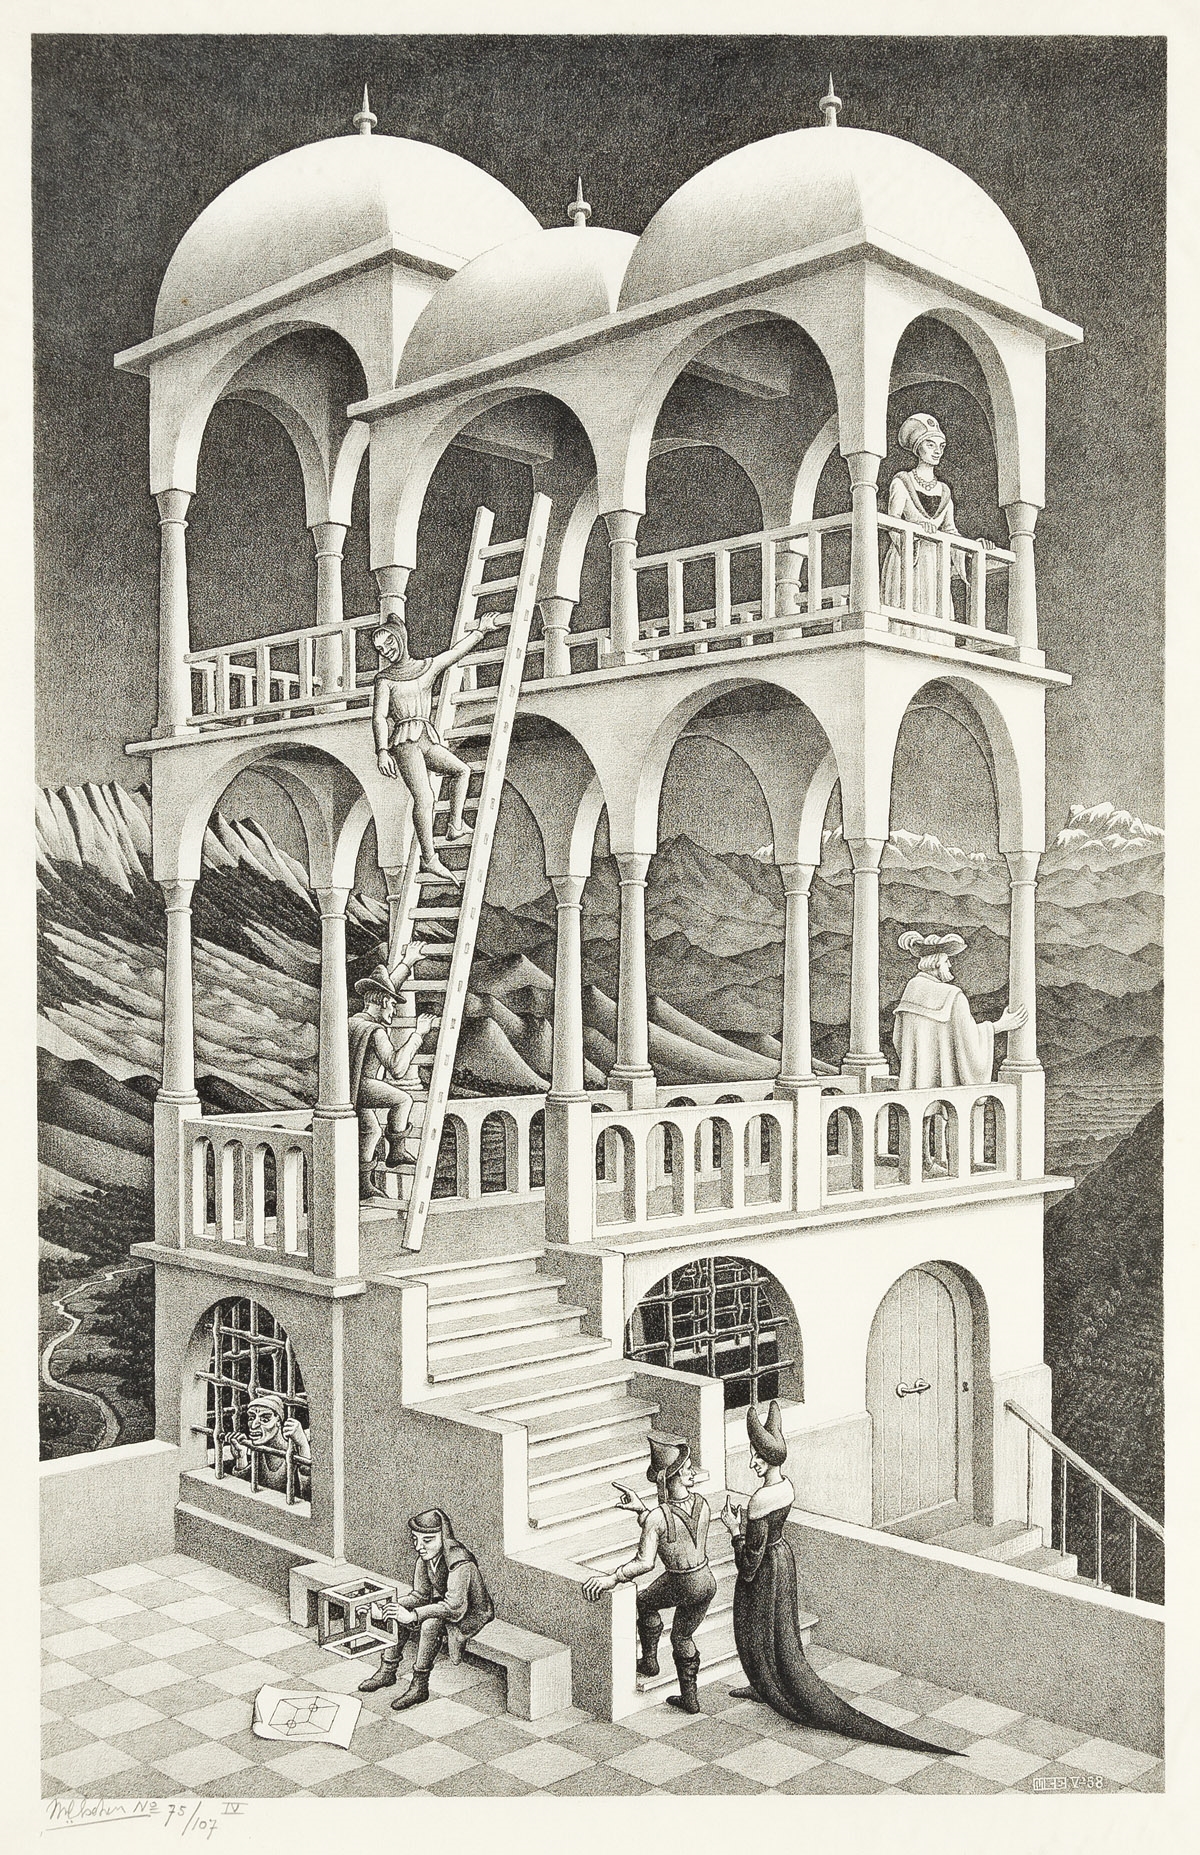 Belvedere. by Maurits Cornelis Escher, 1958